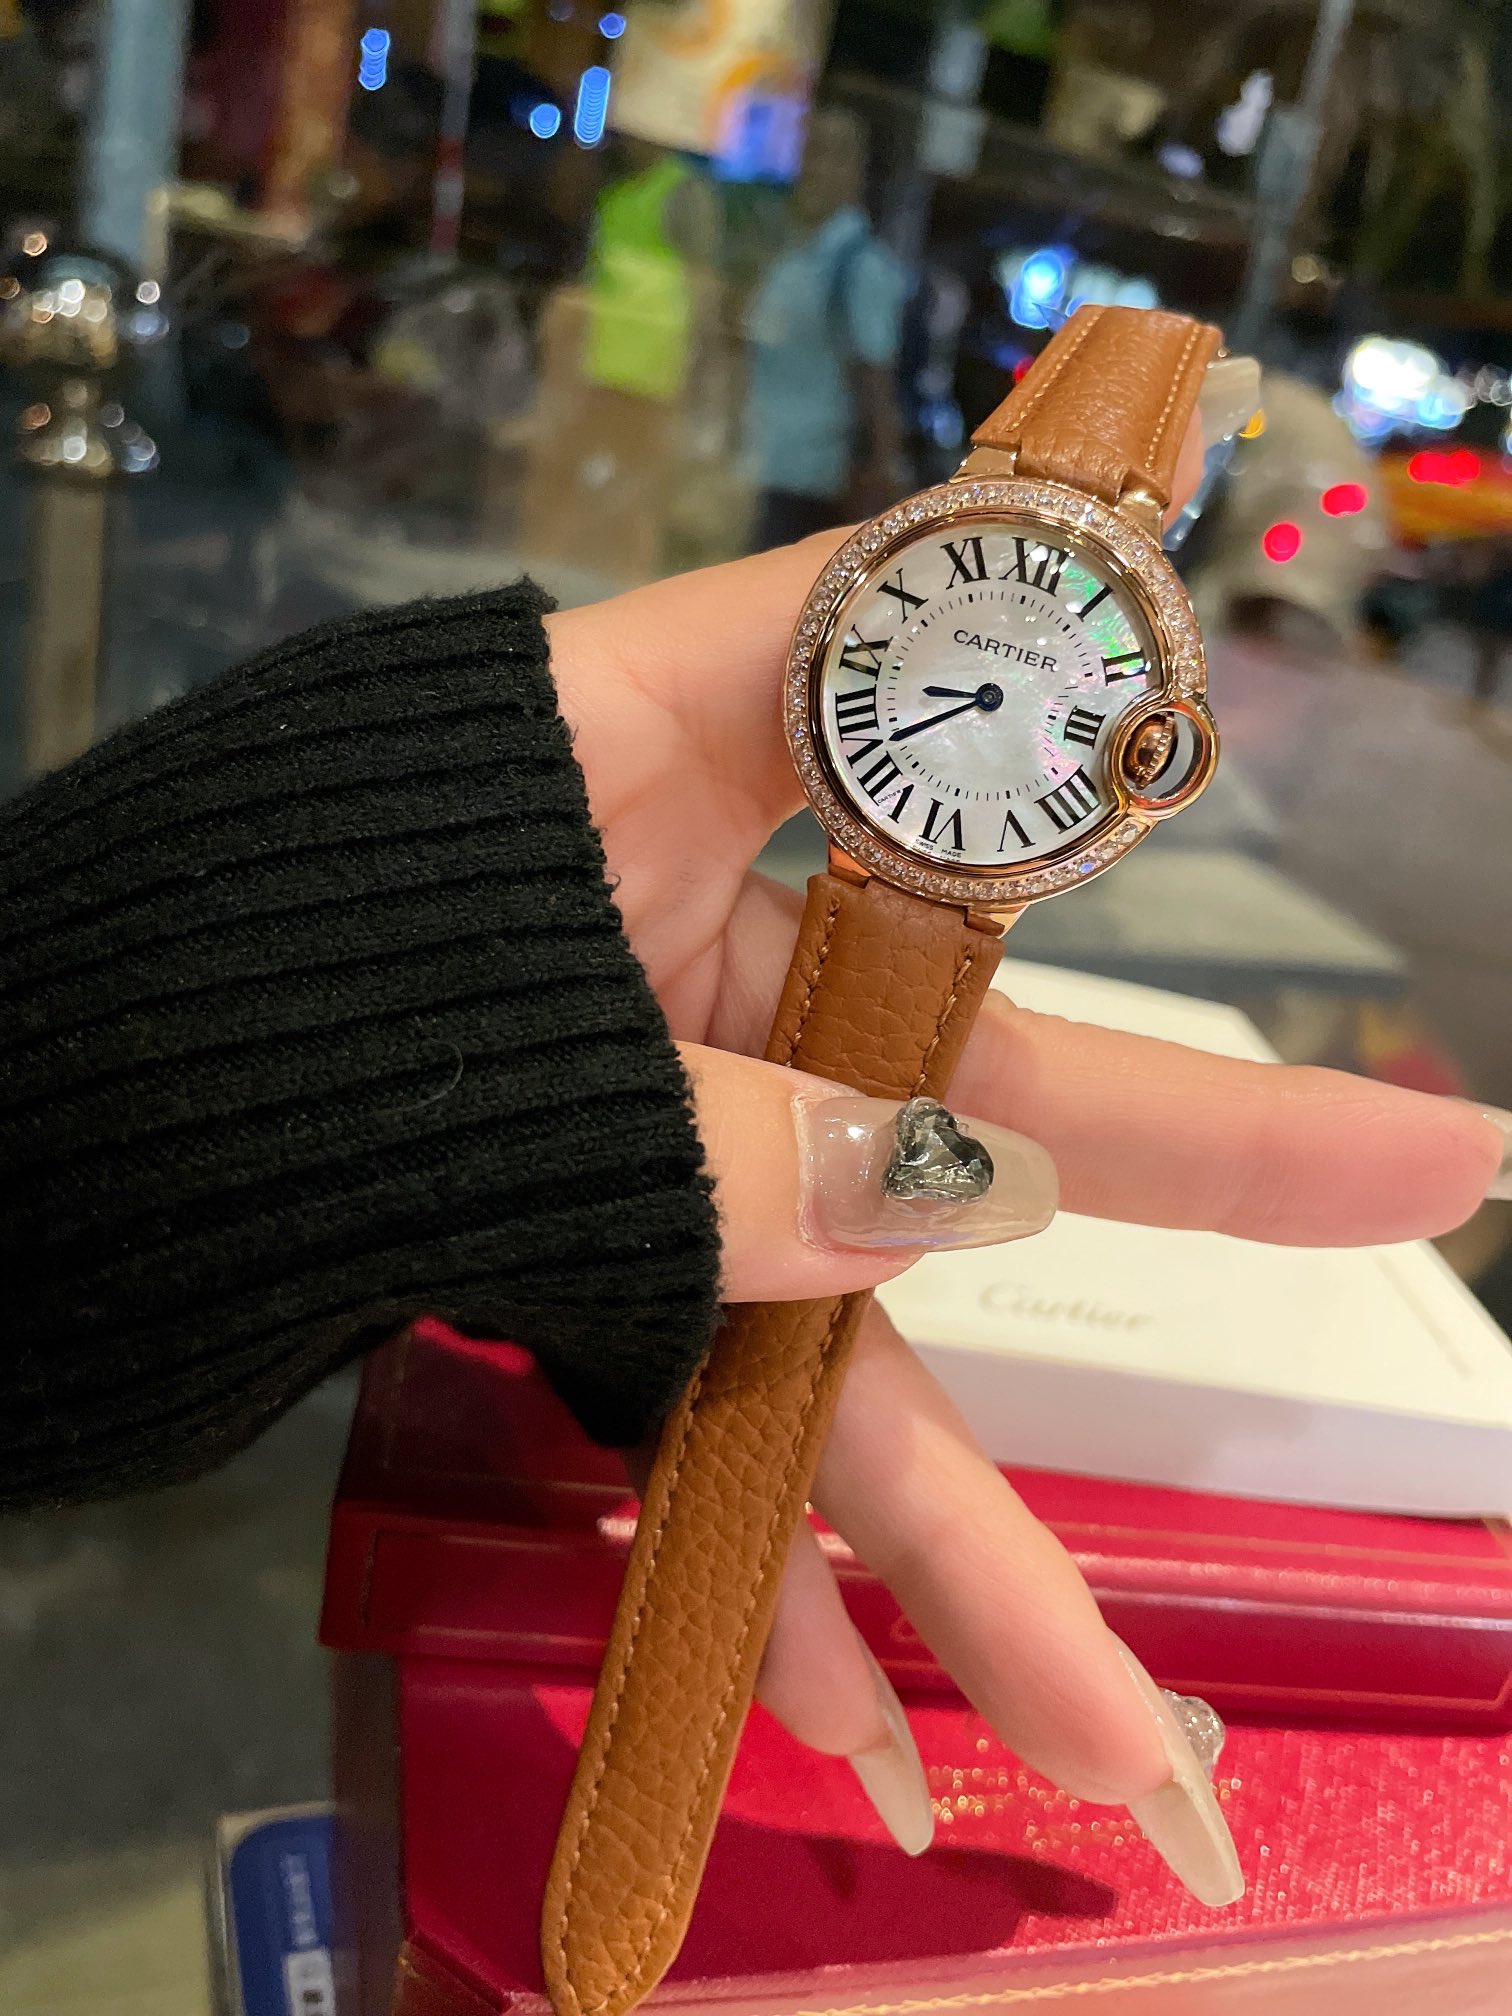 CARTIERカルティエ 腕時計 並行輸入コピー フランス 薄い腕時計 レザー 水晶ダイヤモンド 新商品 限定品 ブラウン_4